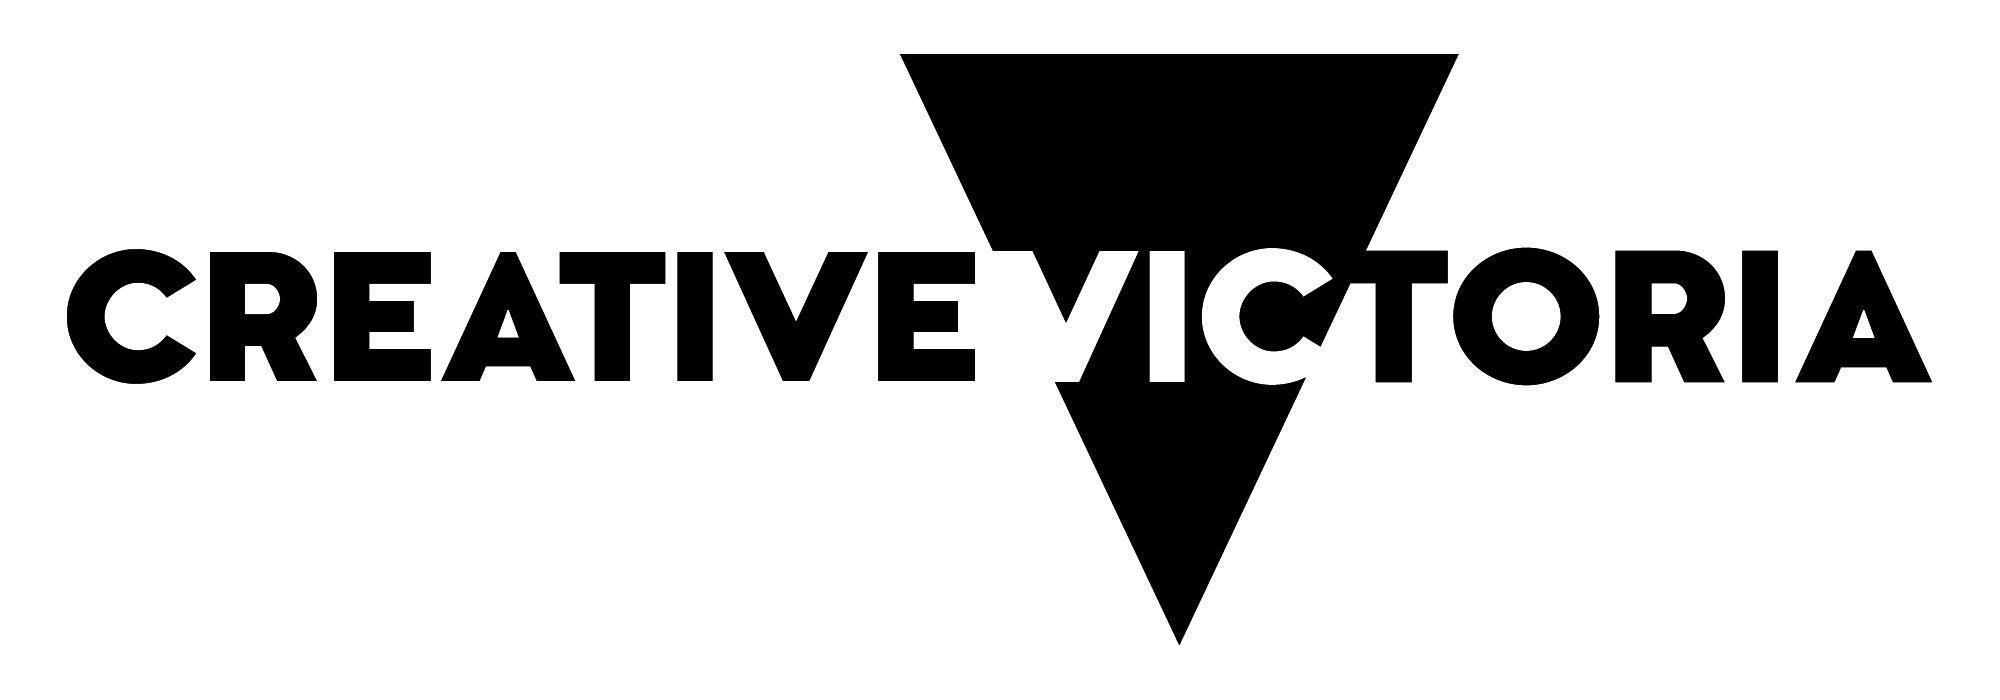 Victoria Logo - Creative Victoria Logo and Guidelines